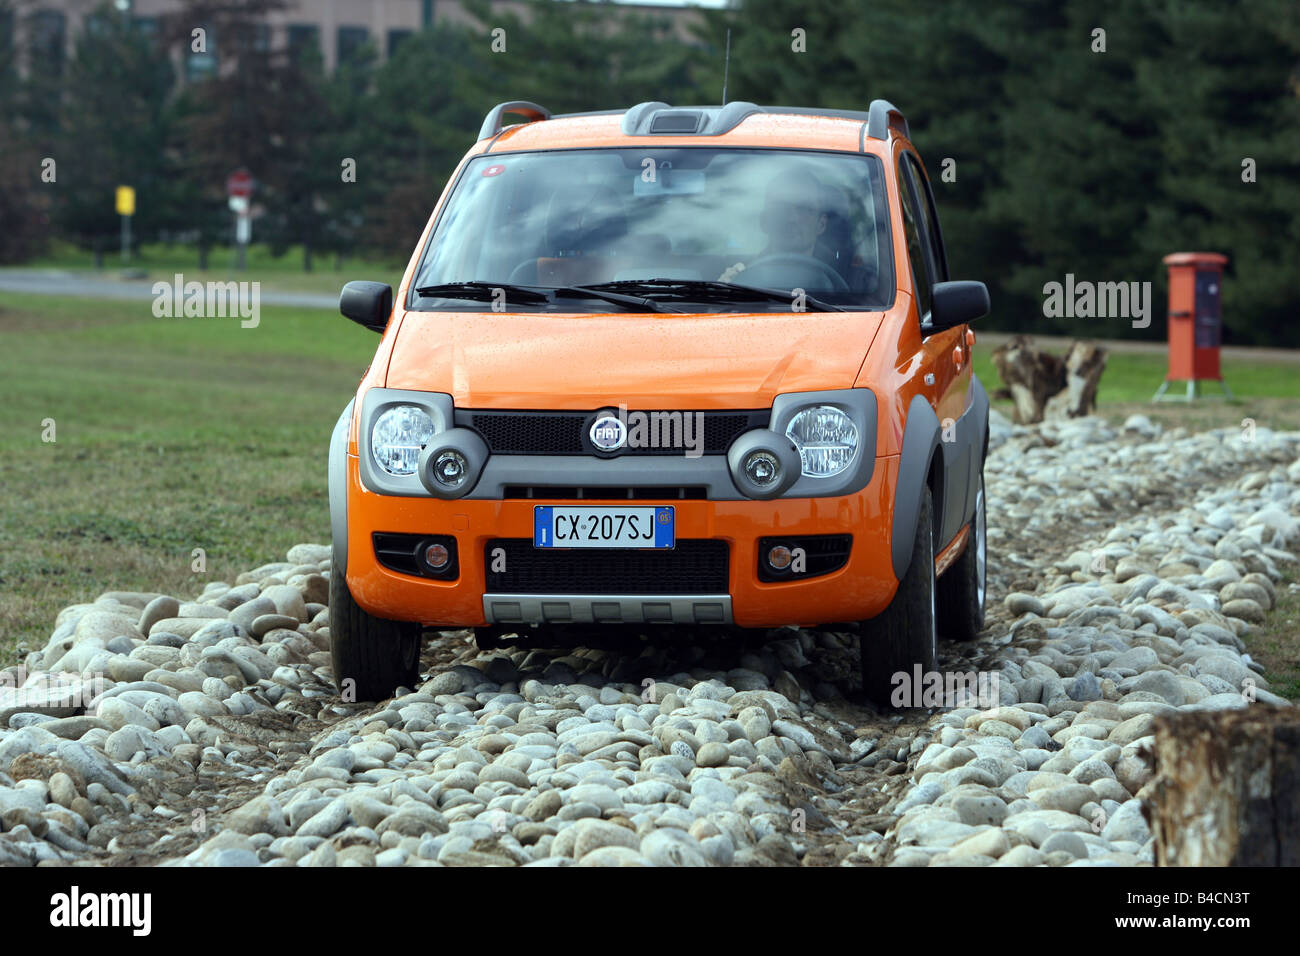 Fiat Panda 1.3 Multijet 16V 4x4, model year 2006-, orange